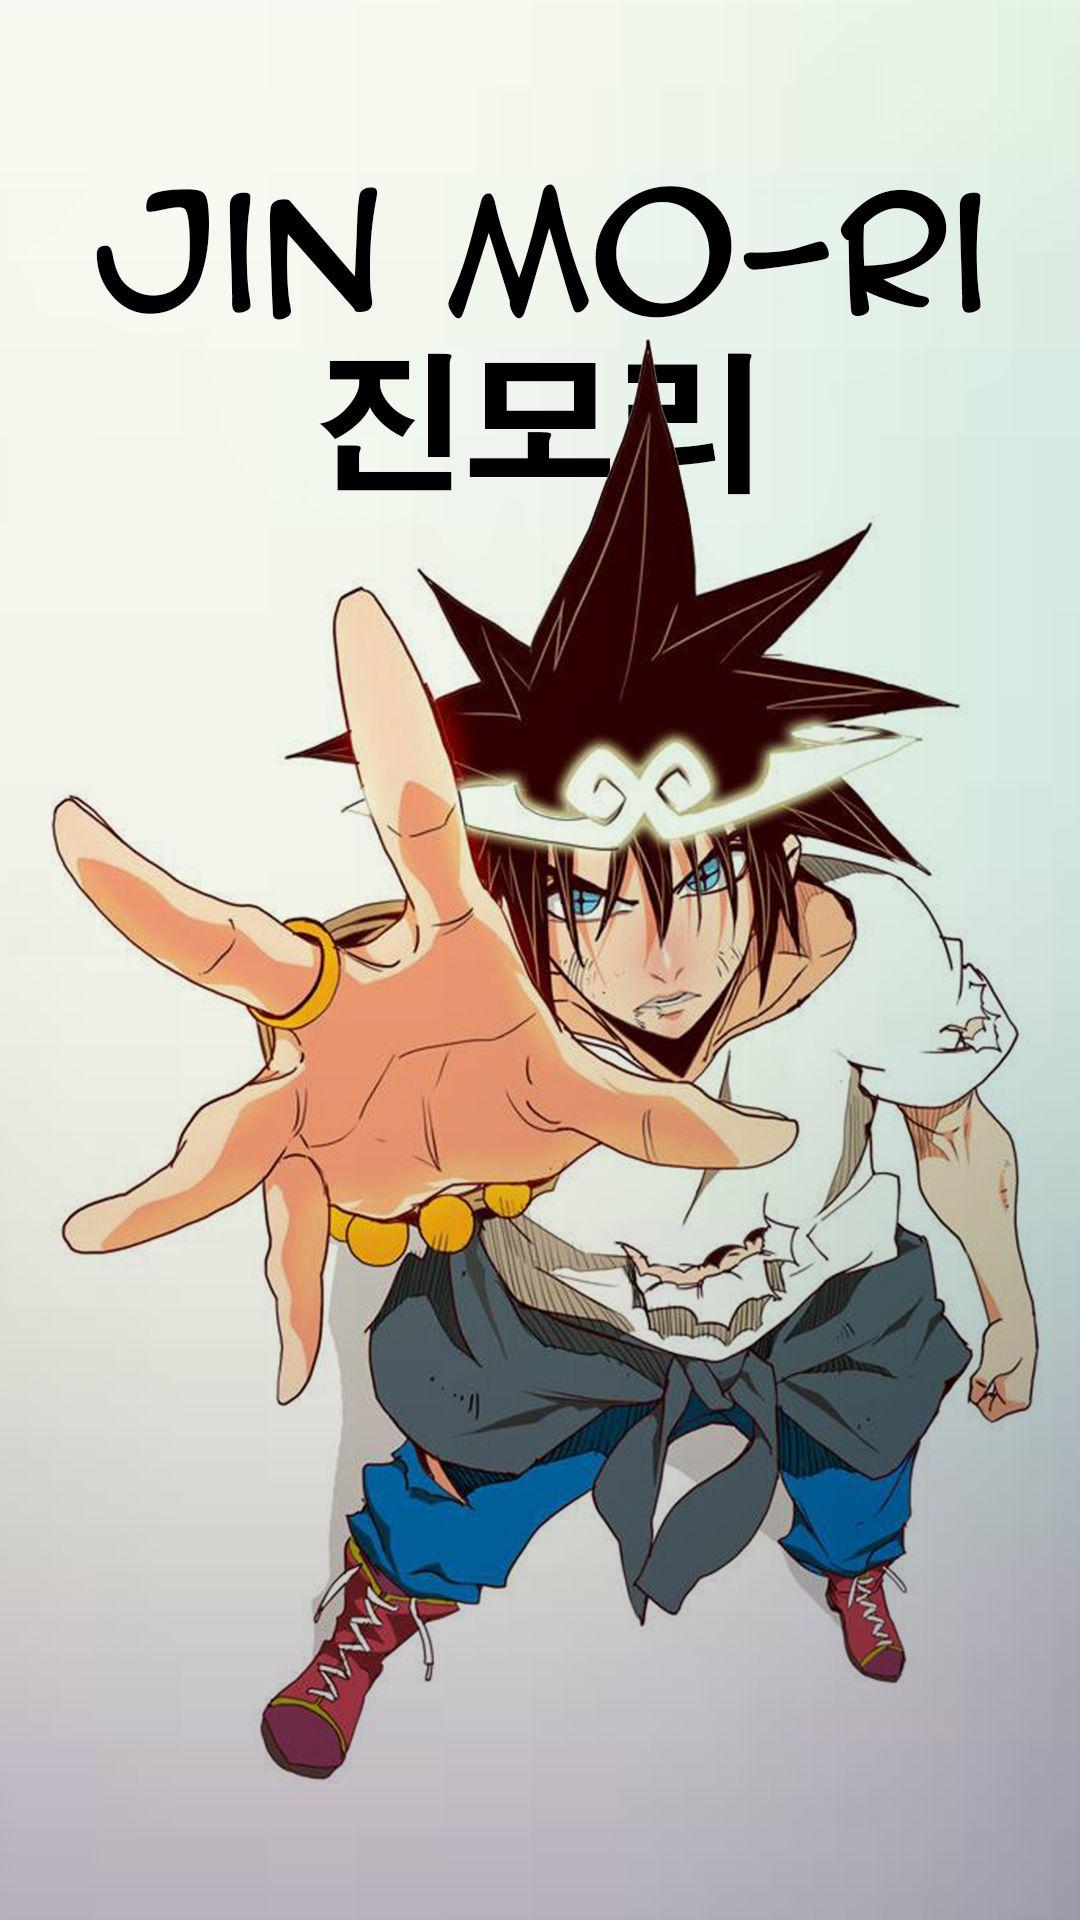 The God Of Highschool Manga Wallpapers - Wallpaper Cave